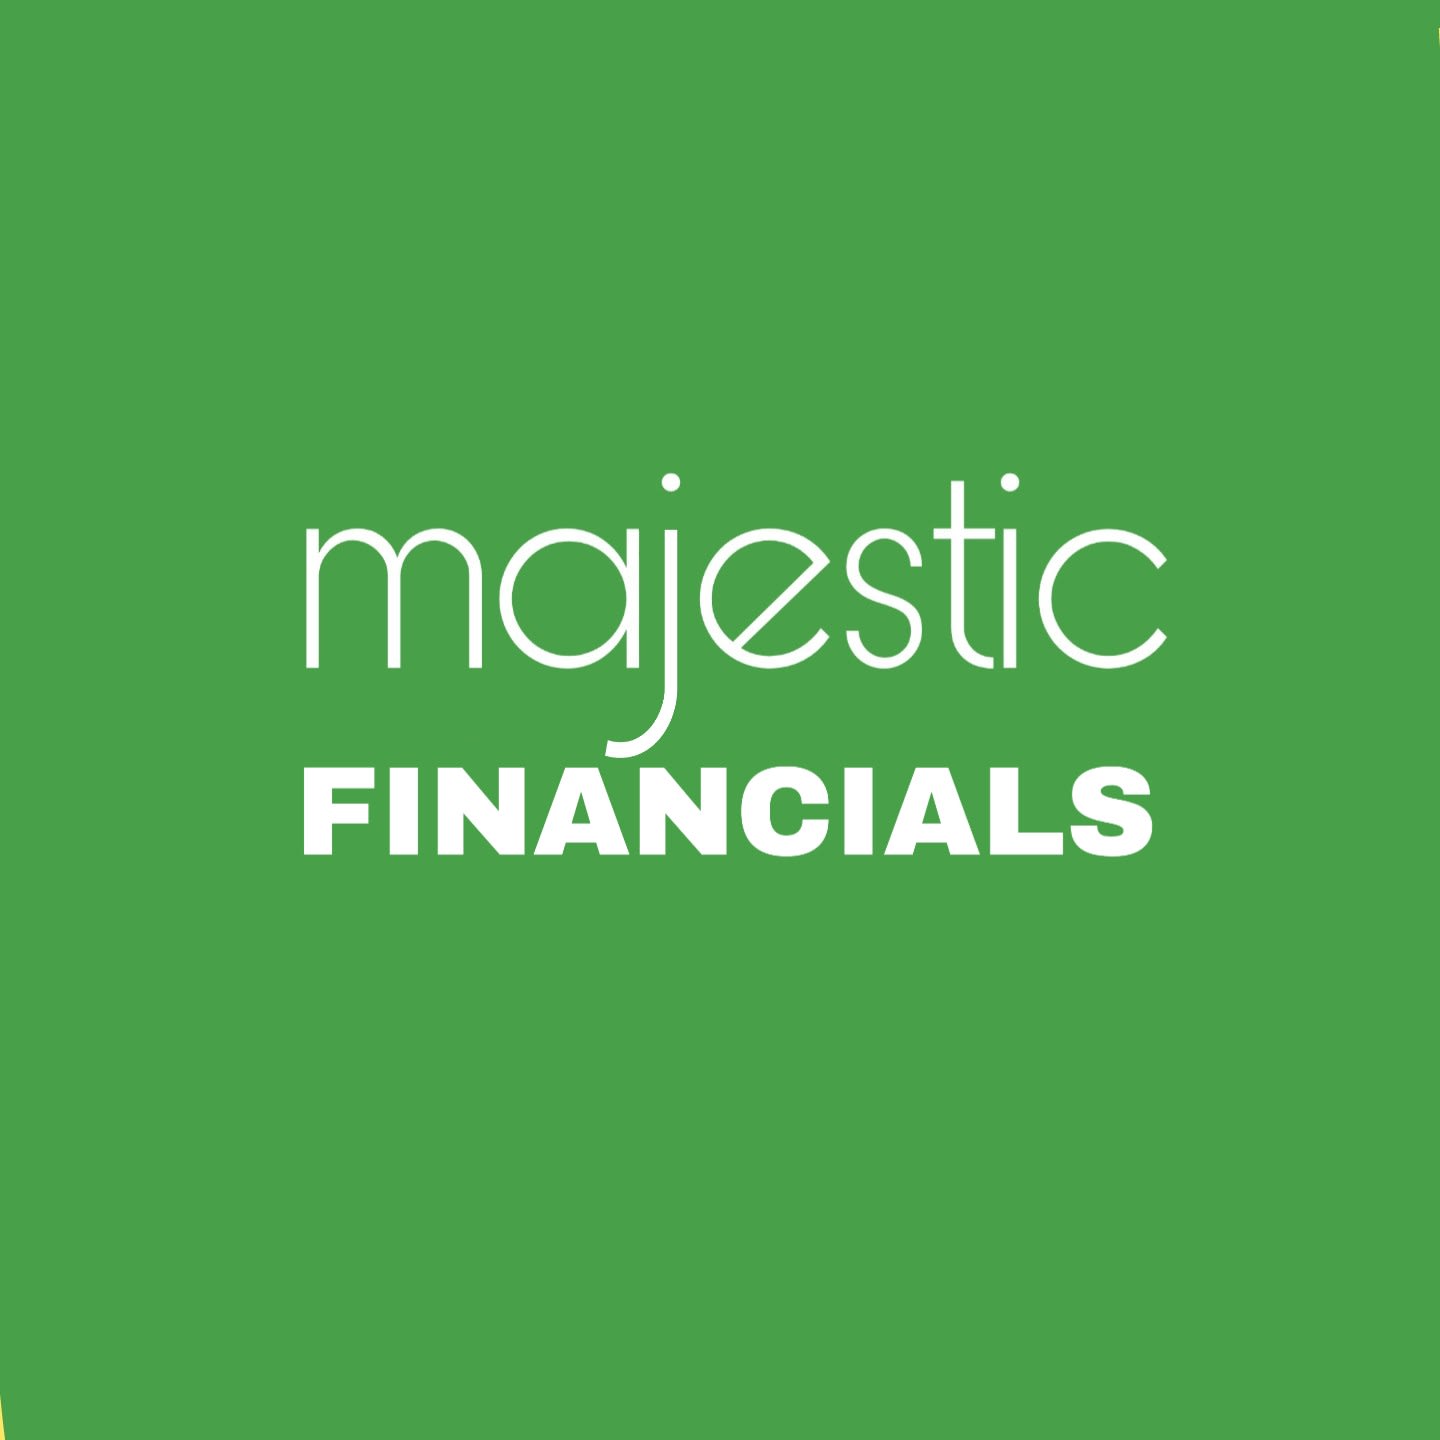 Majestic Financials